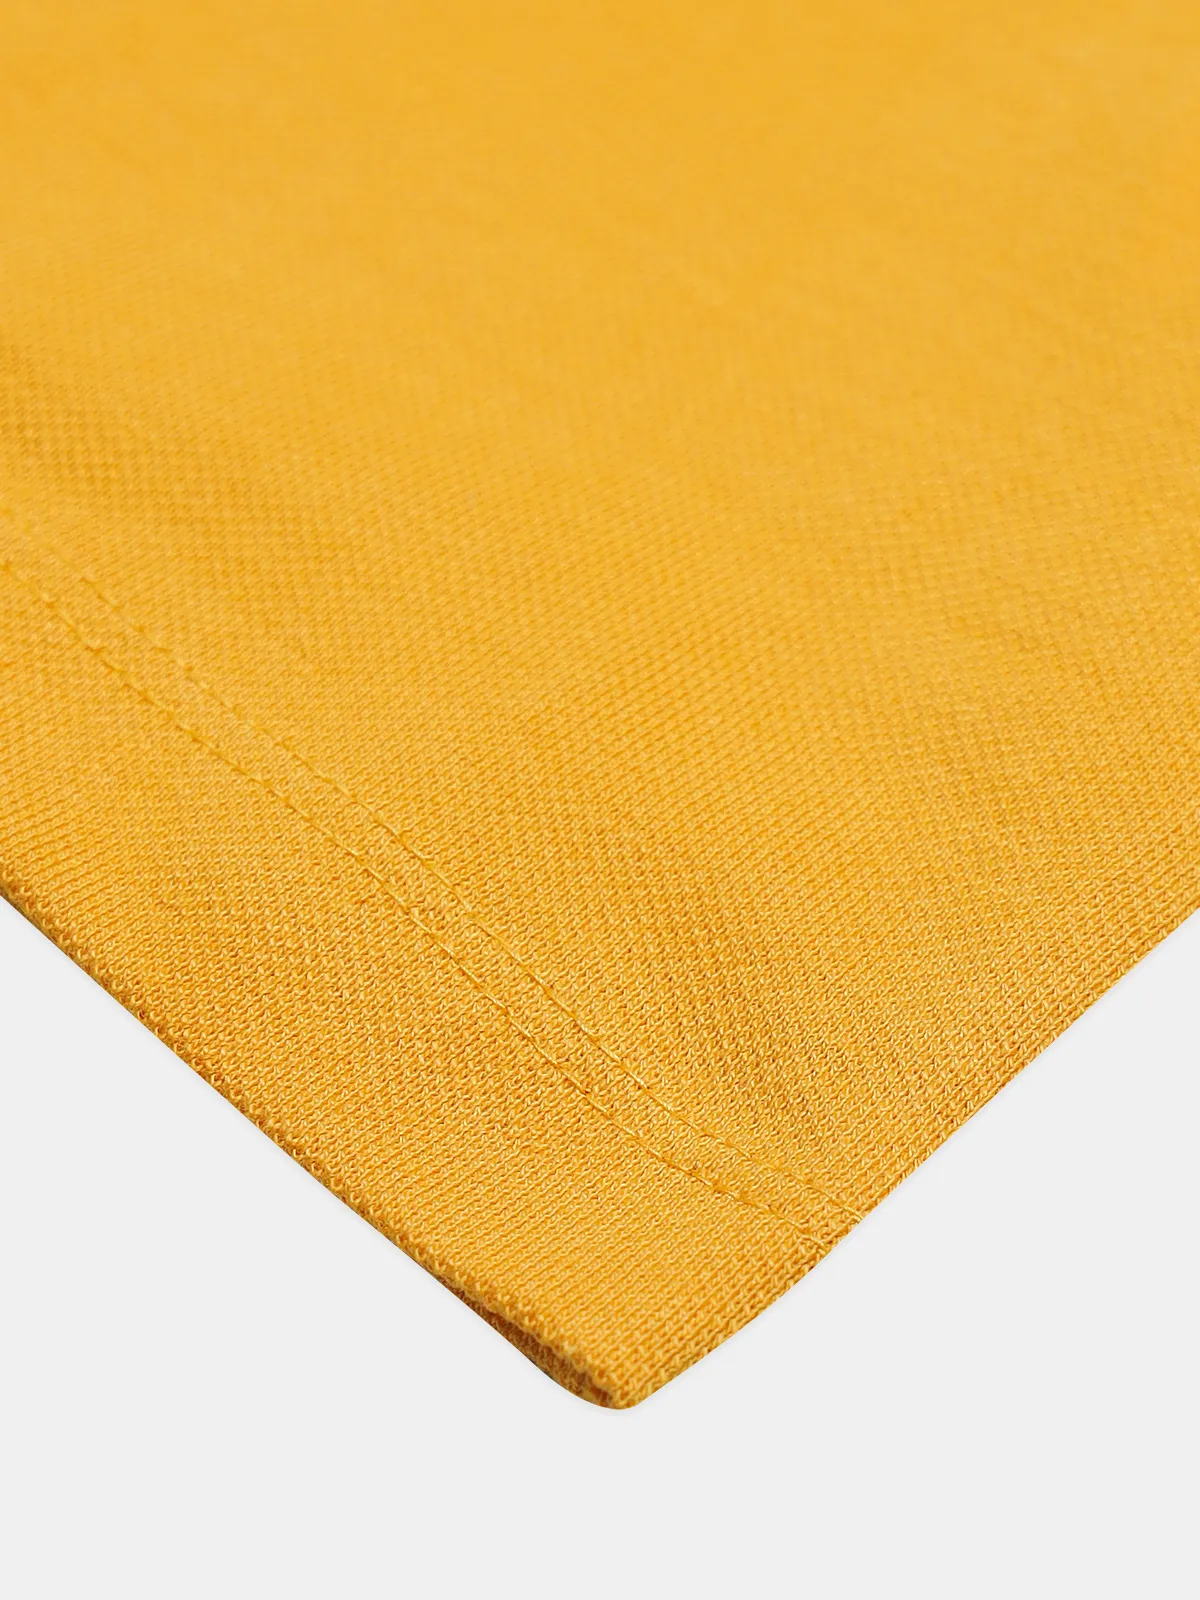 UCB slim fit printed t shirt in mustard yellow